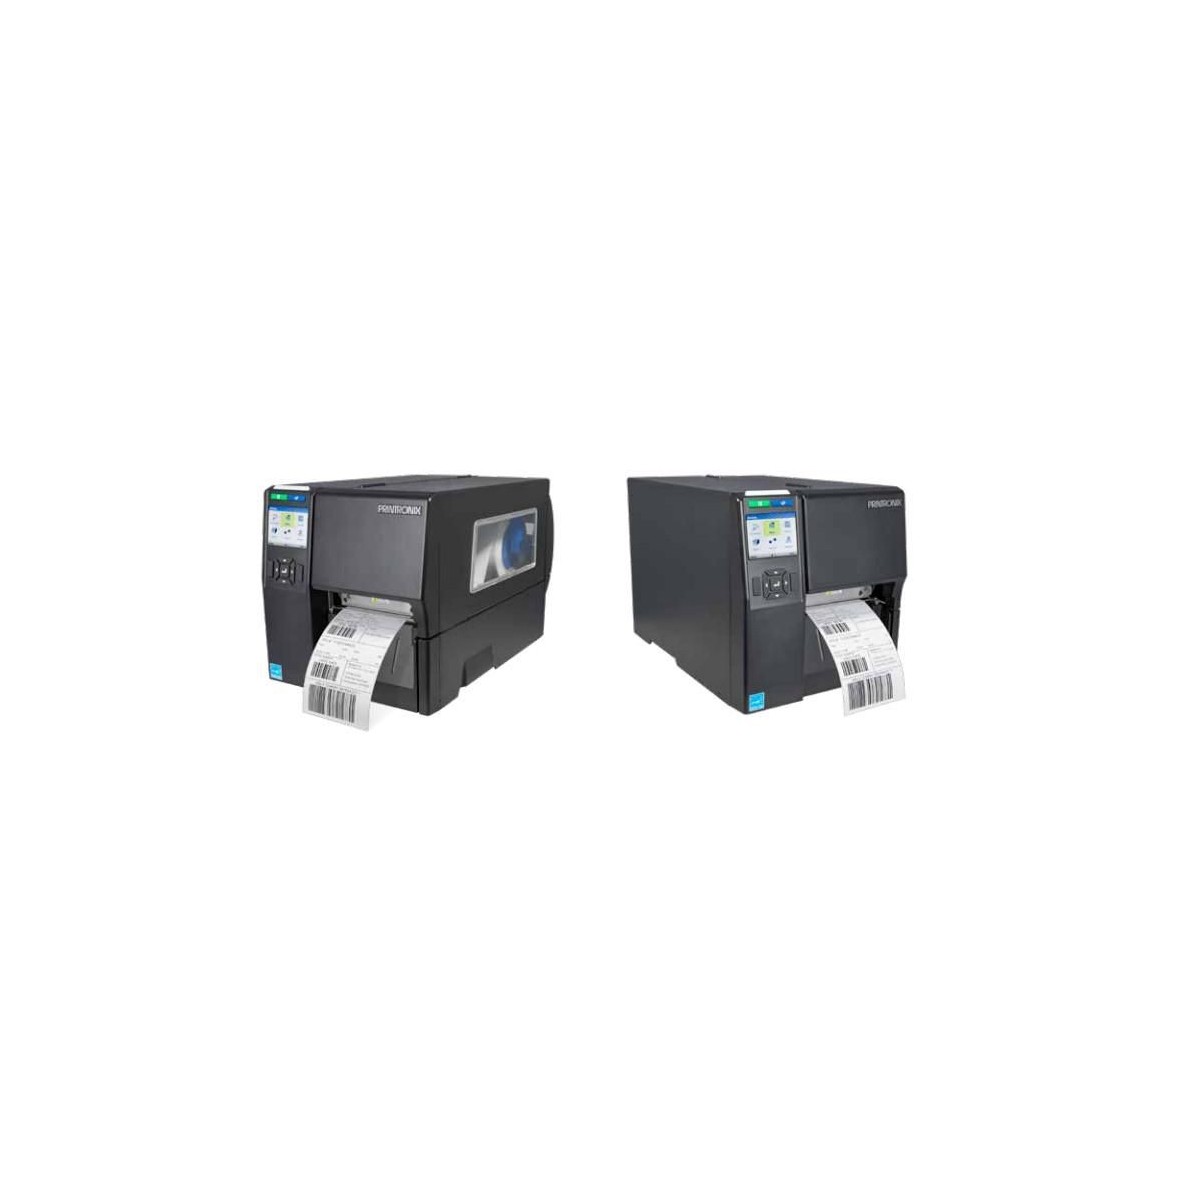 Printronix Auto ID T4000 Thermal Transfer Printer 4" wide 300dpi - Printer - Label Printer